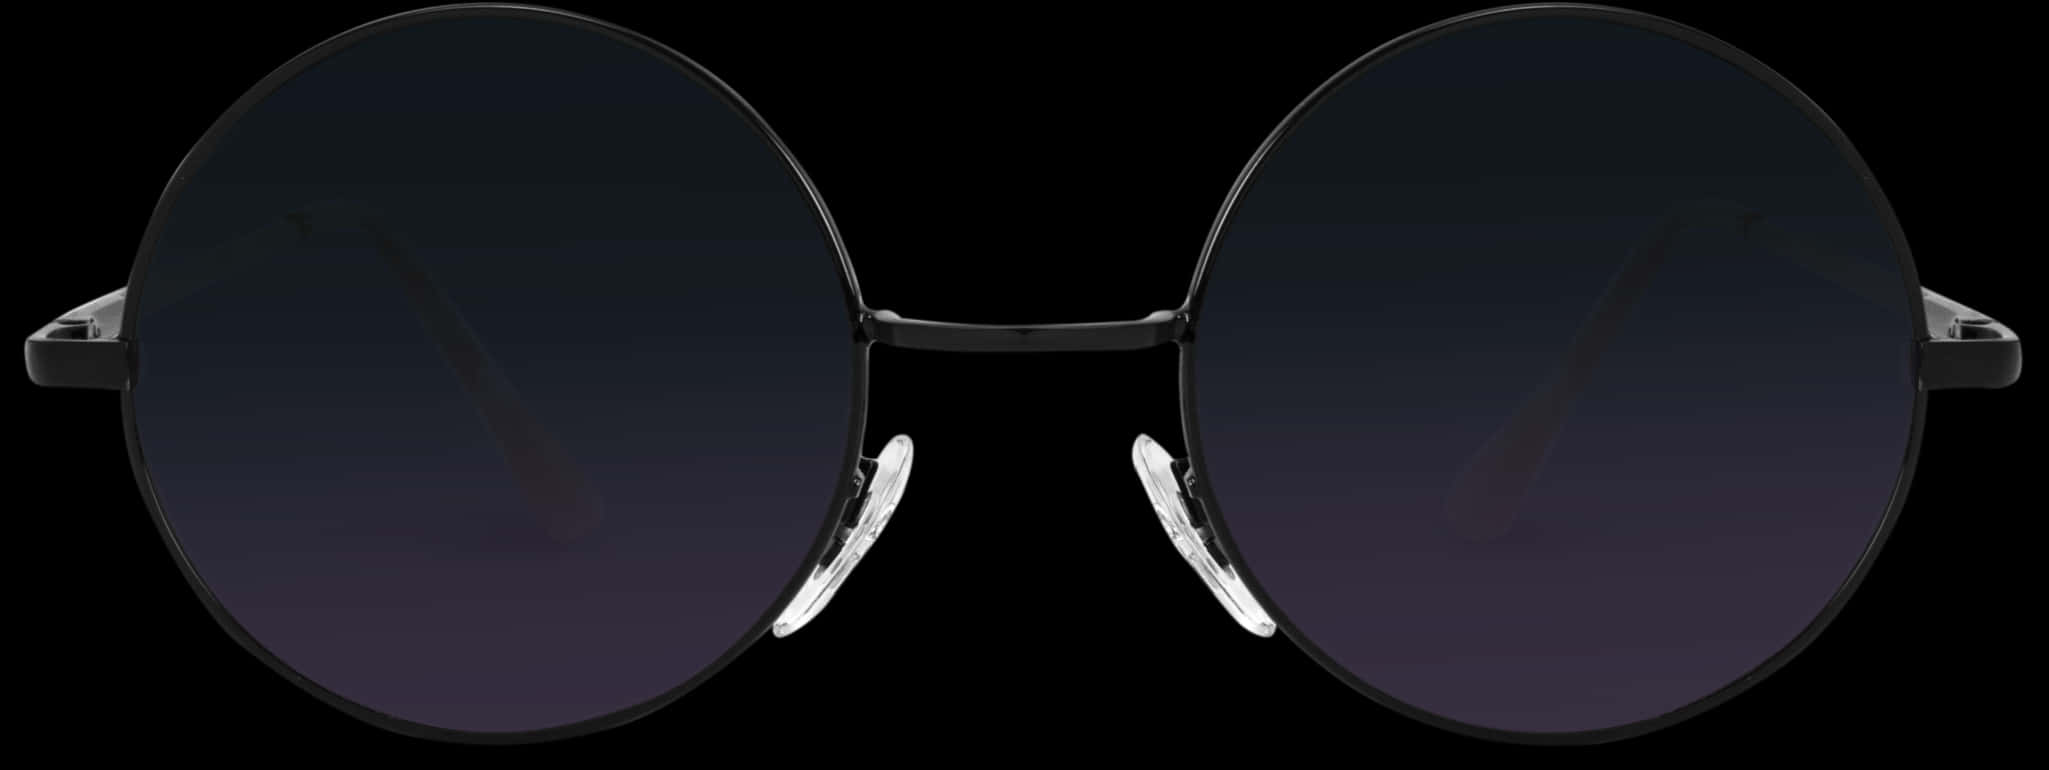 Round Glasses With Dark Lenses